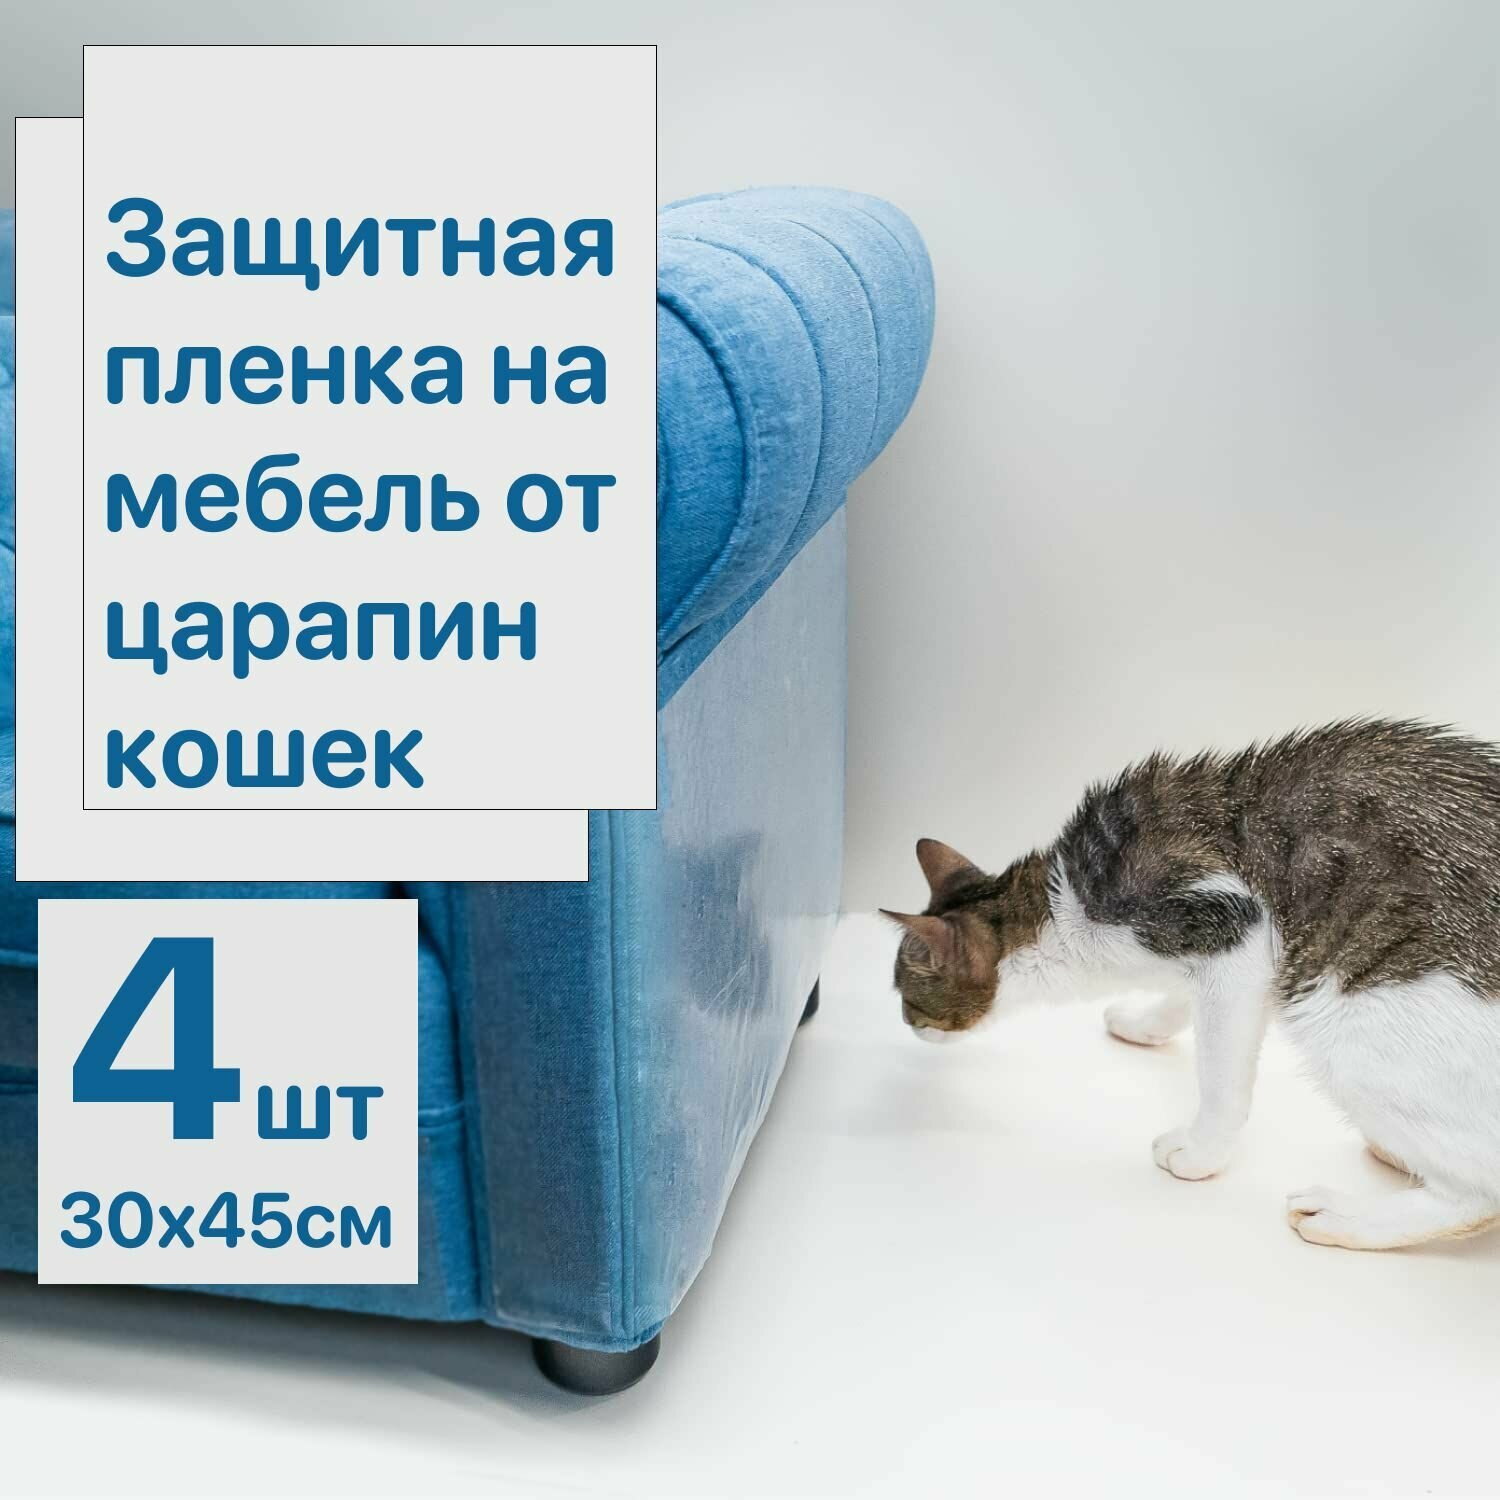 Защитная когтеточка, самоклеящаяся пленка на мебель и обои от кошек, антицарапка